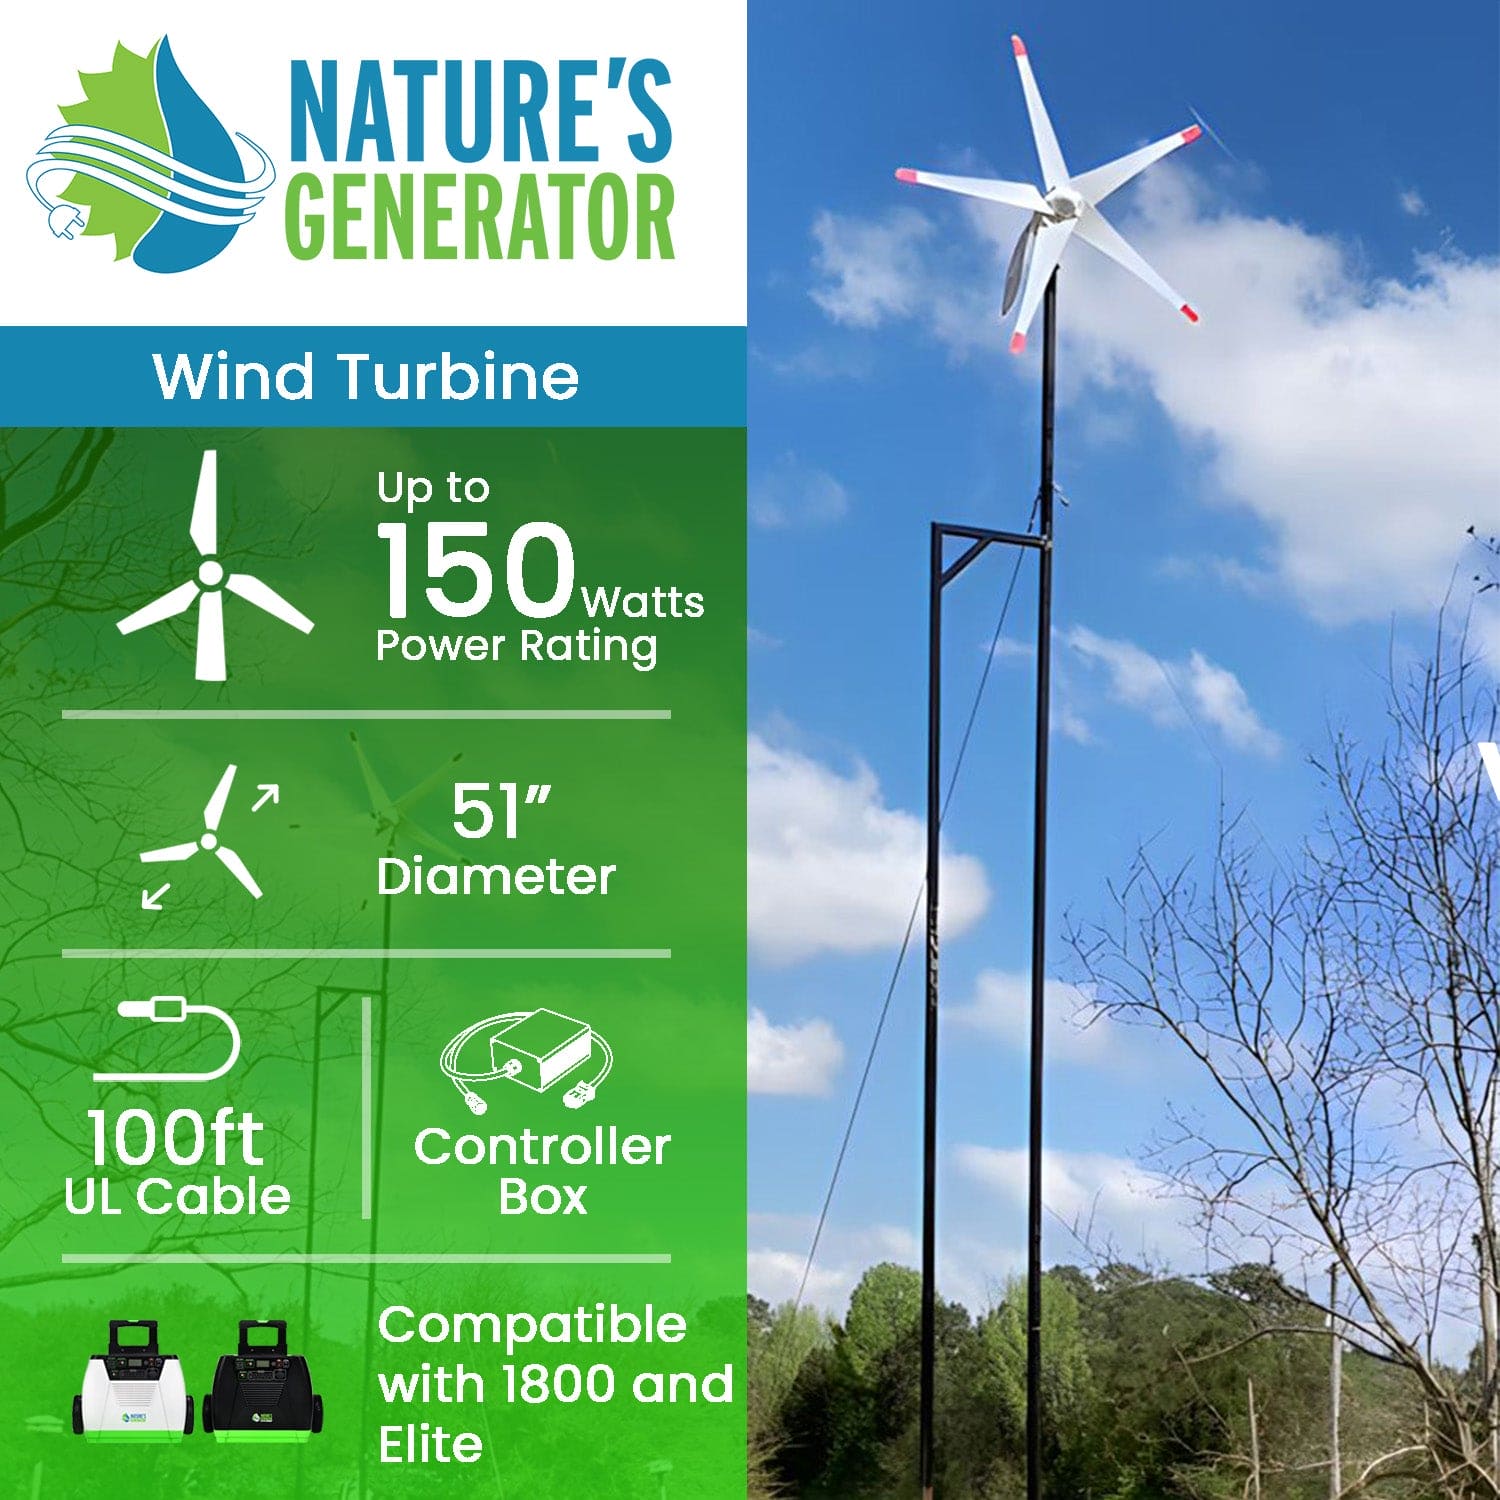 Nature's Generator Wind Turbine - Nature's Generator